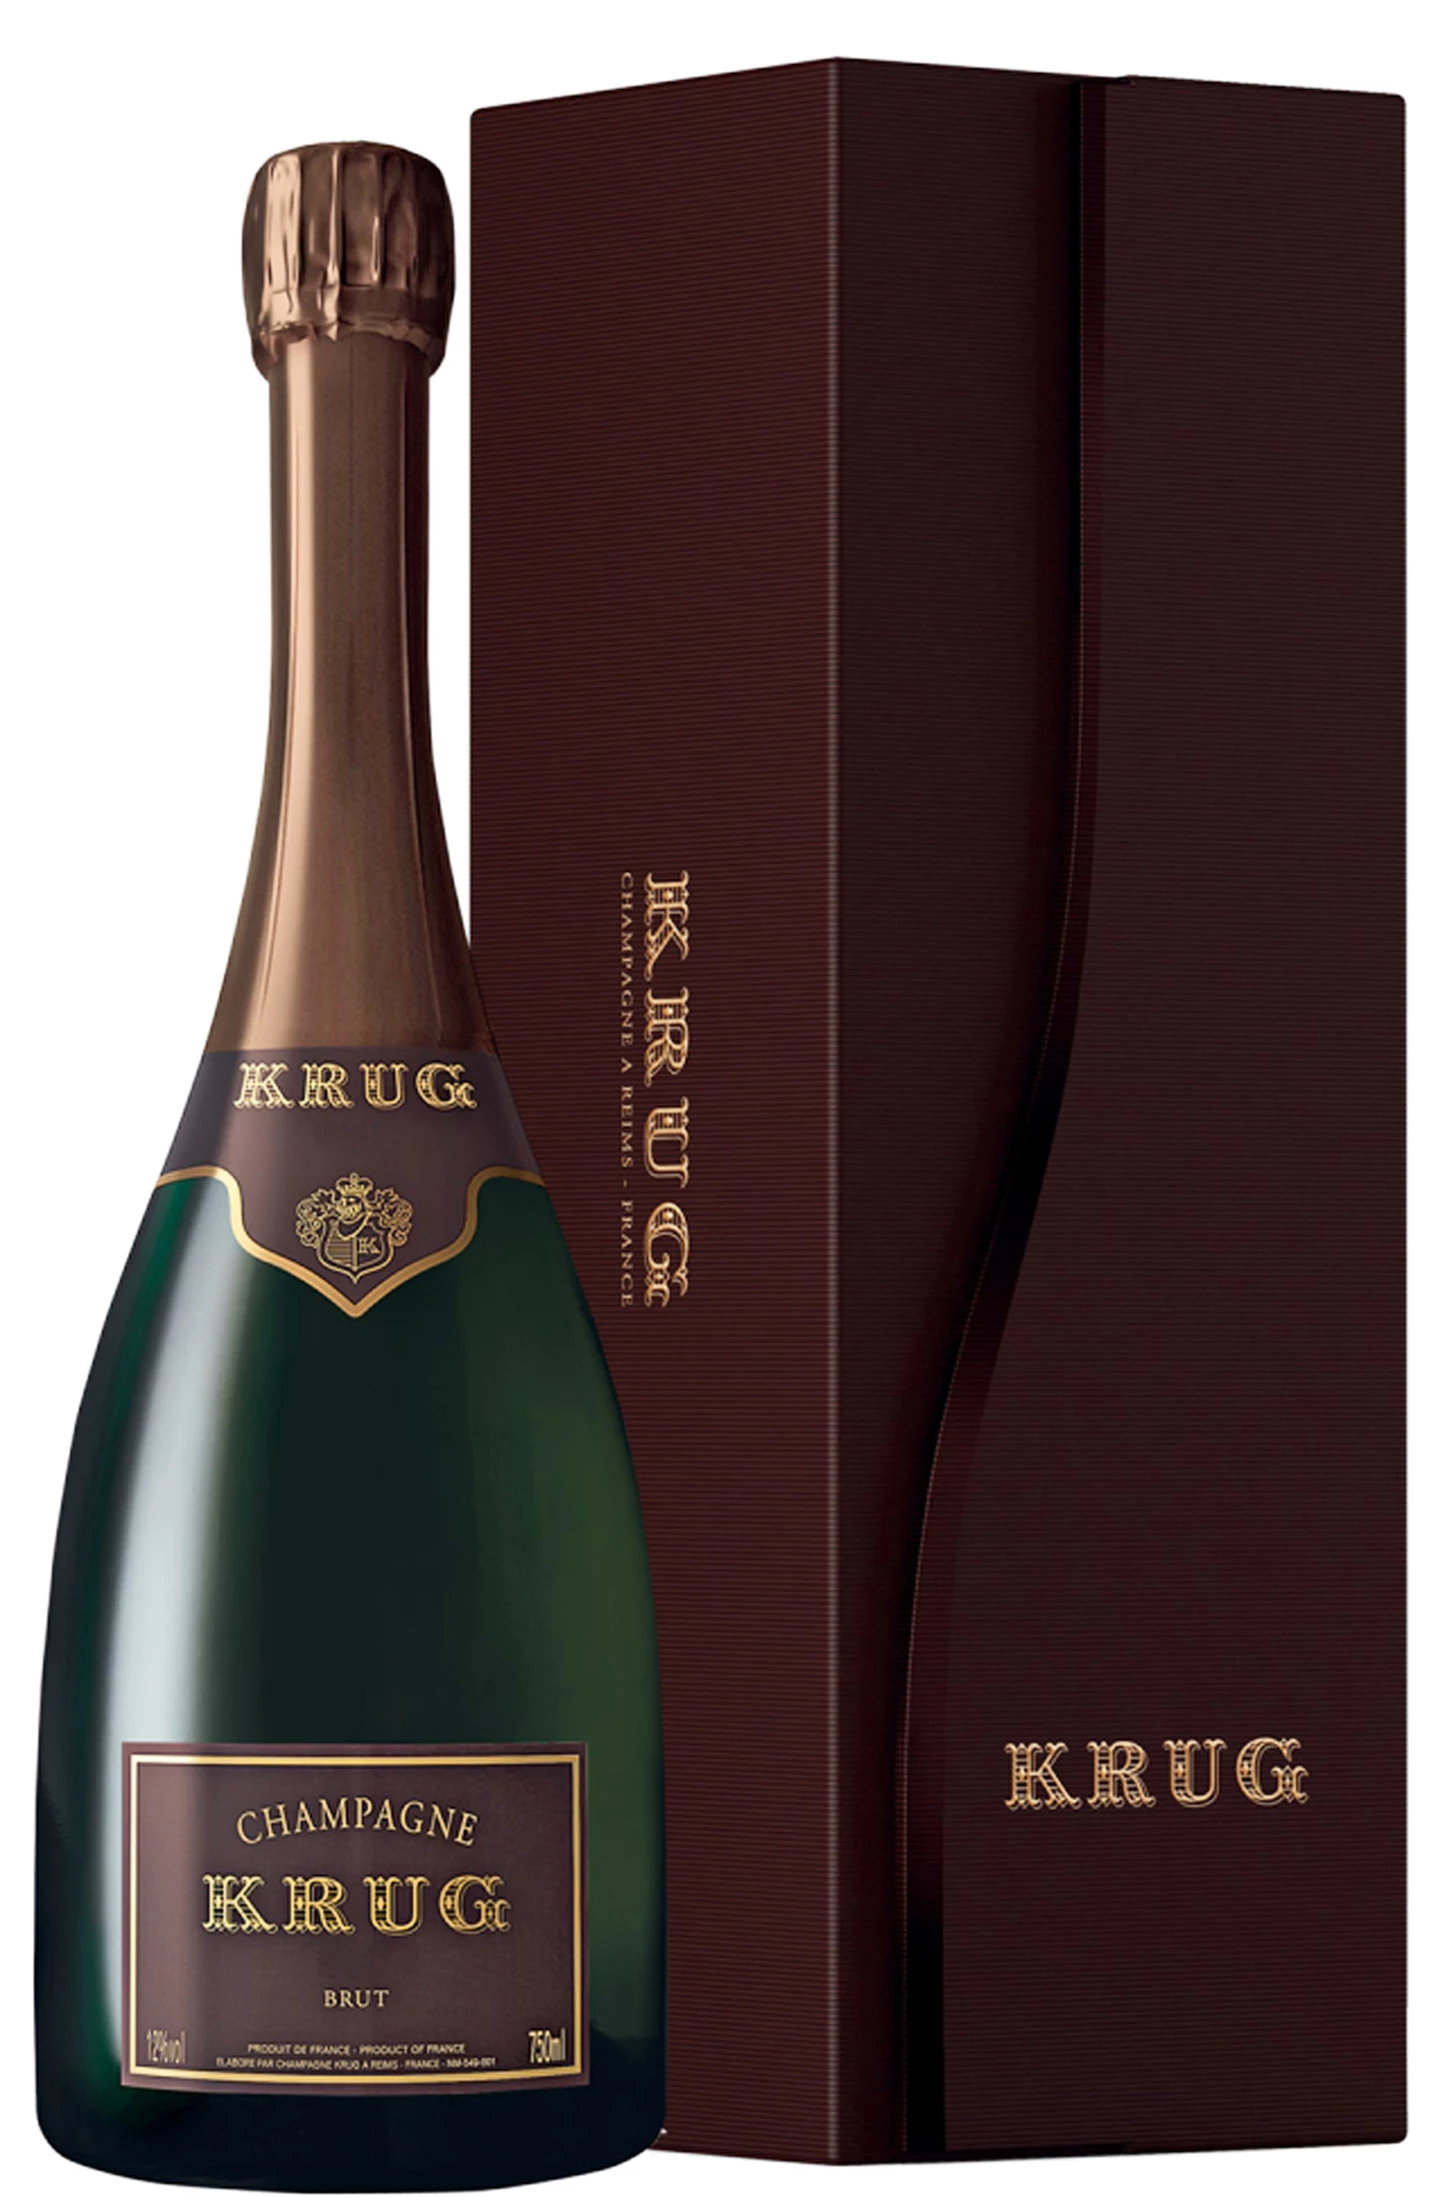 Løgismose Champagne Reims Krug Vintage Brut and giftbox 2004 - 208654